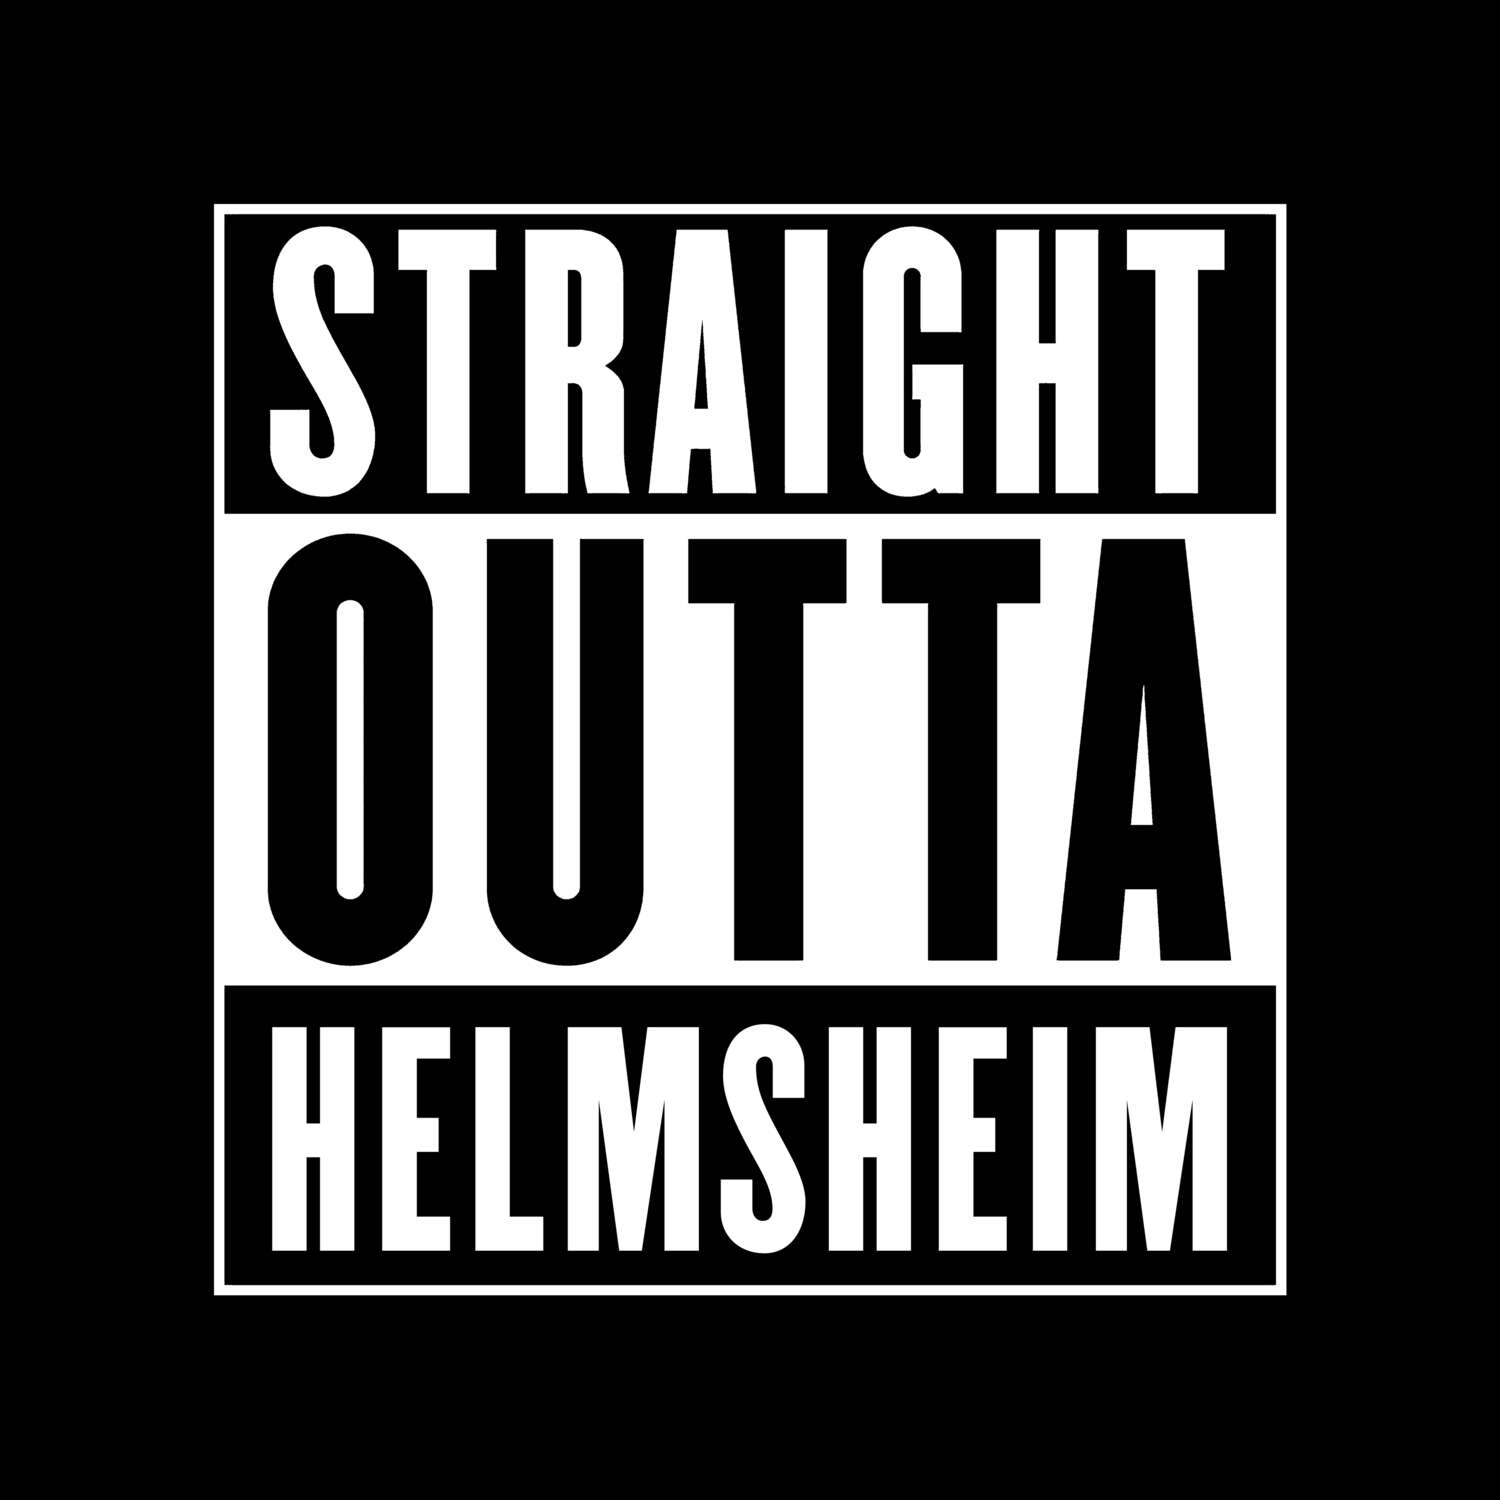 Helmsheim T-Shirt »Straight Outta«